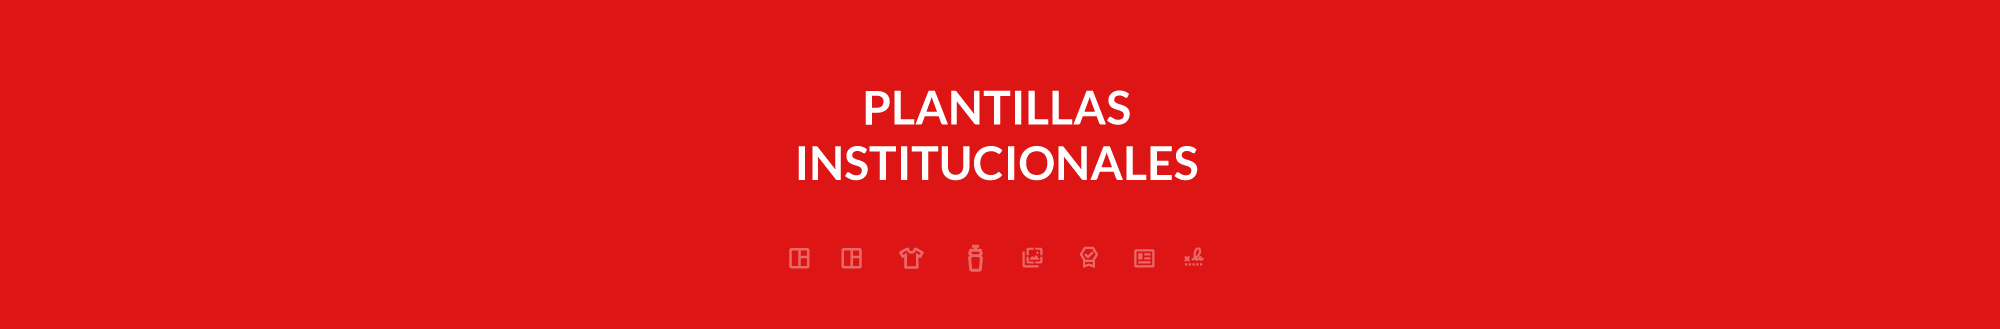 PLANTILLAS INSTITUCIONALES